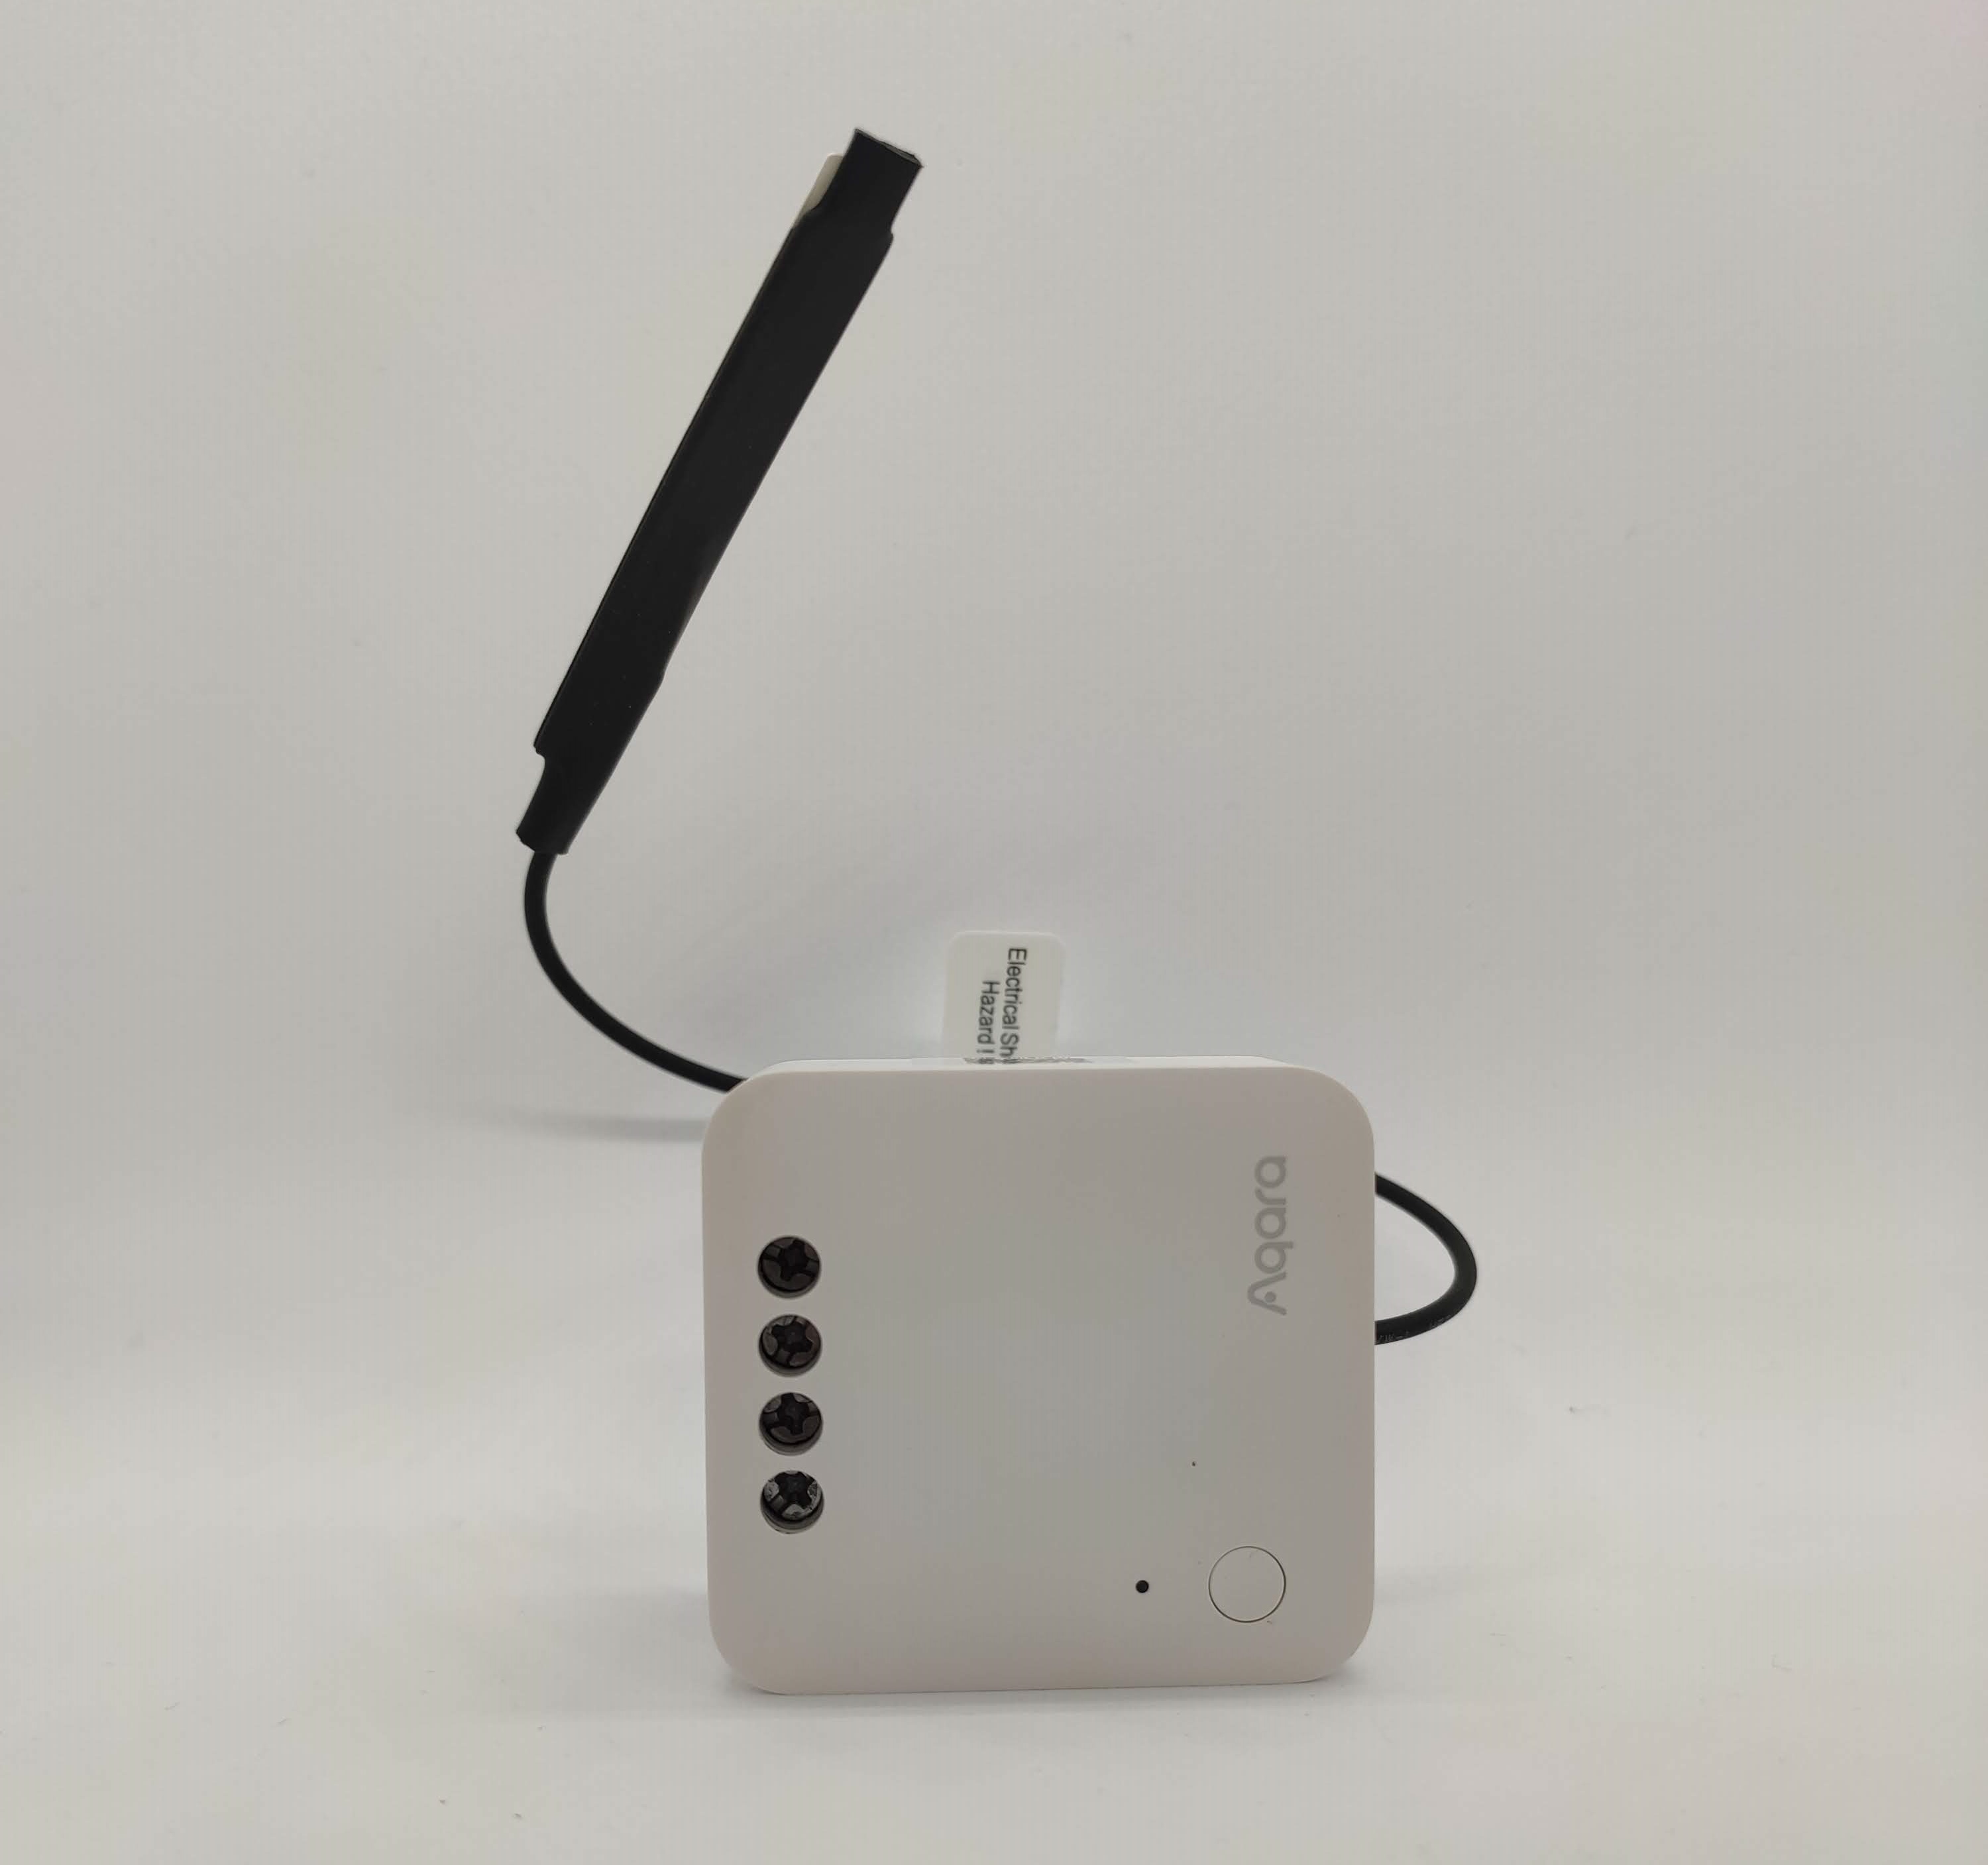 Aqara Single Switch Module T1 (sans Neutral) (HomeKit)